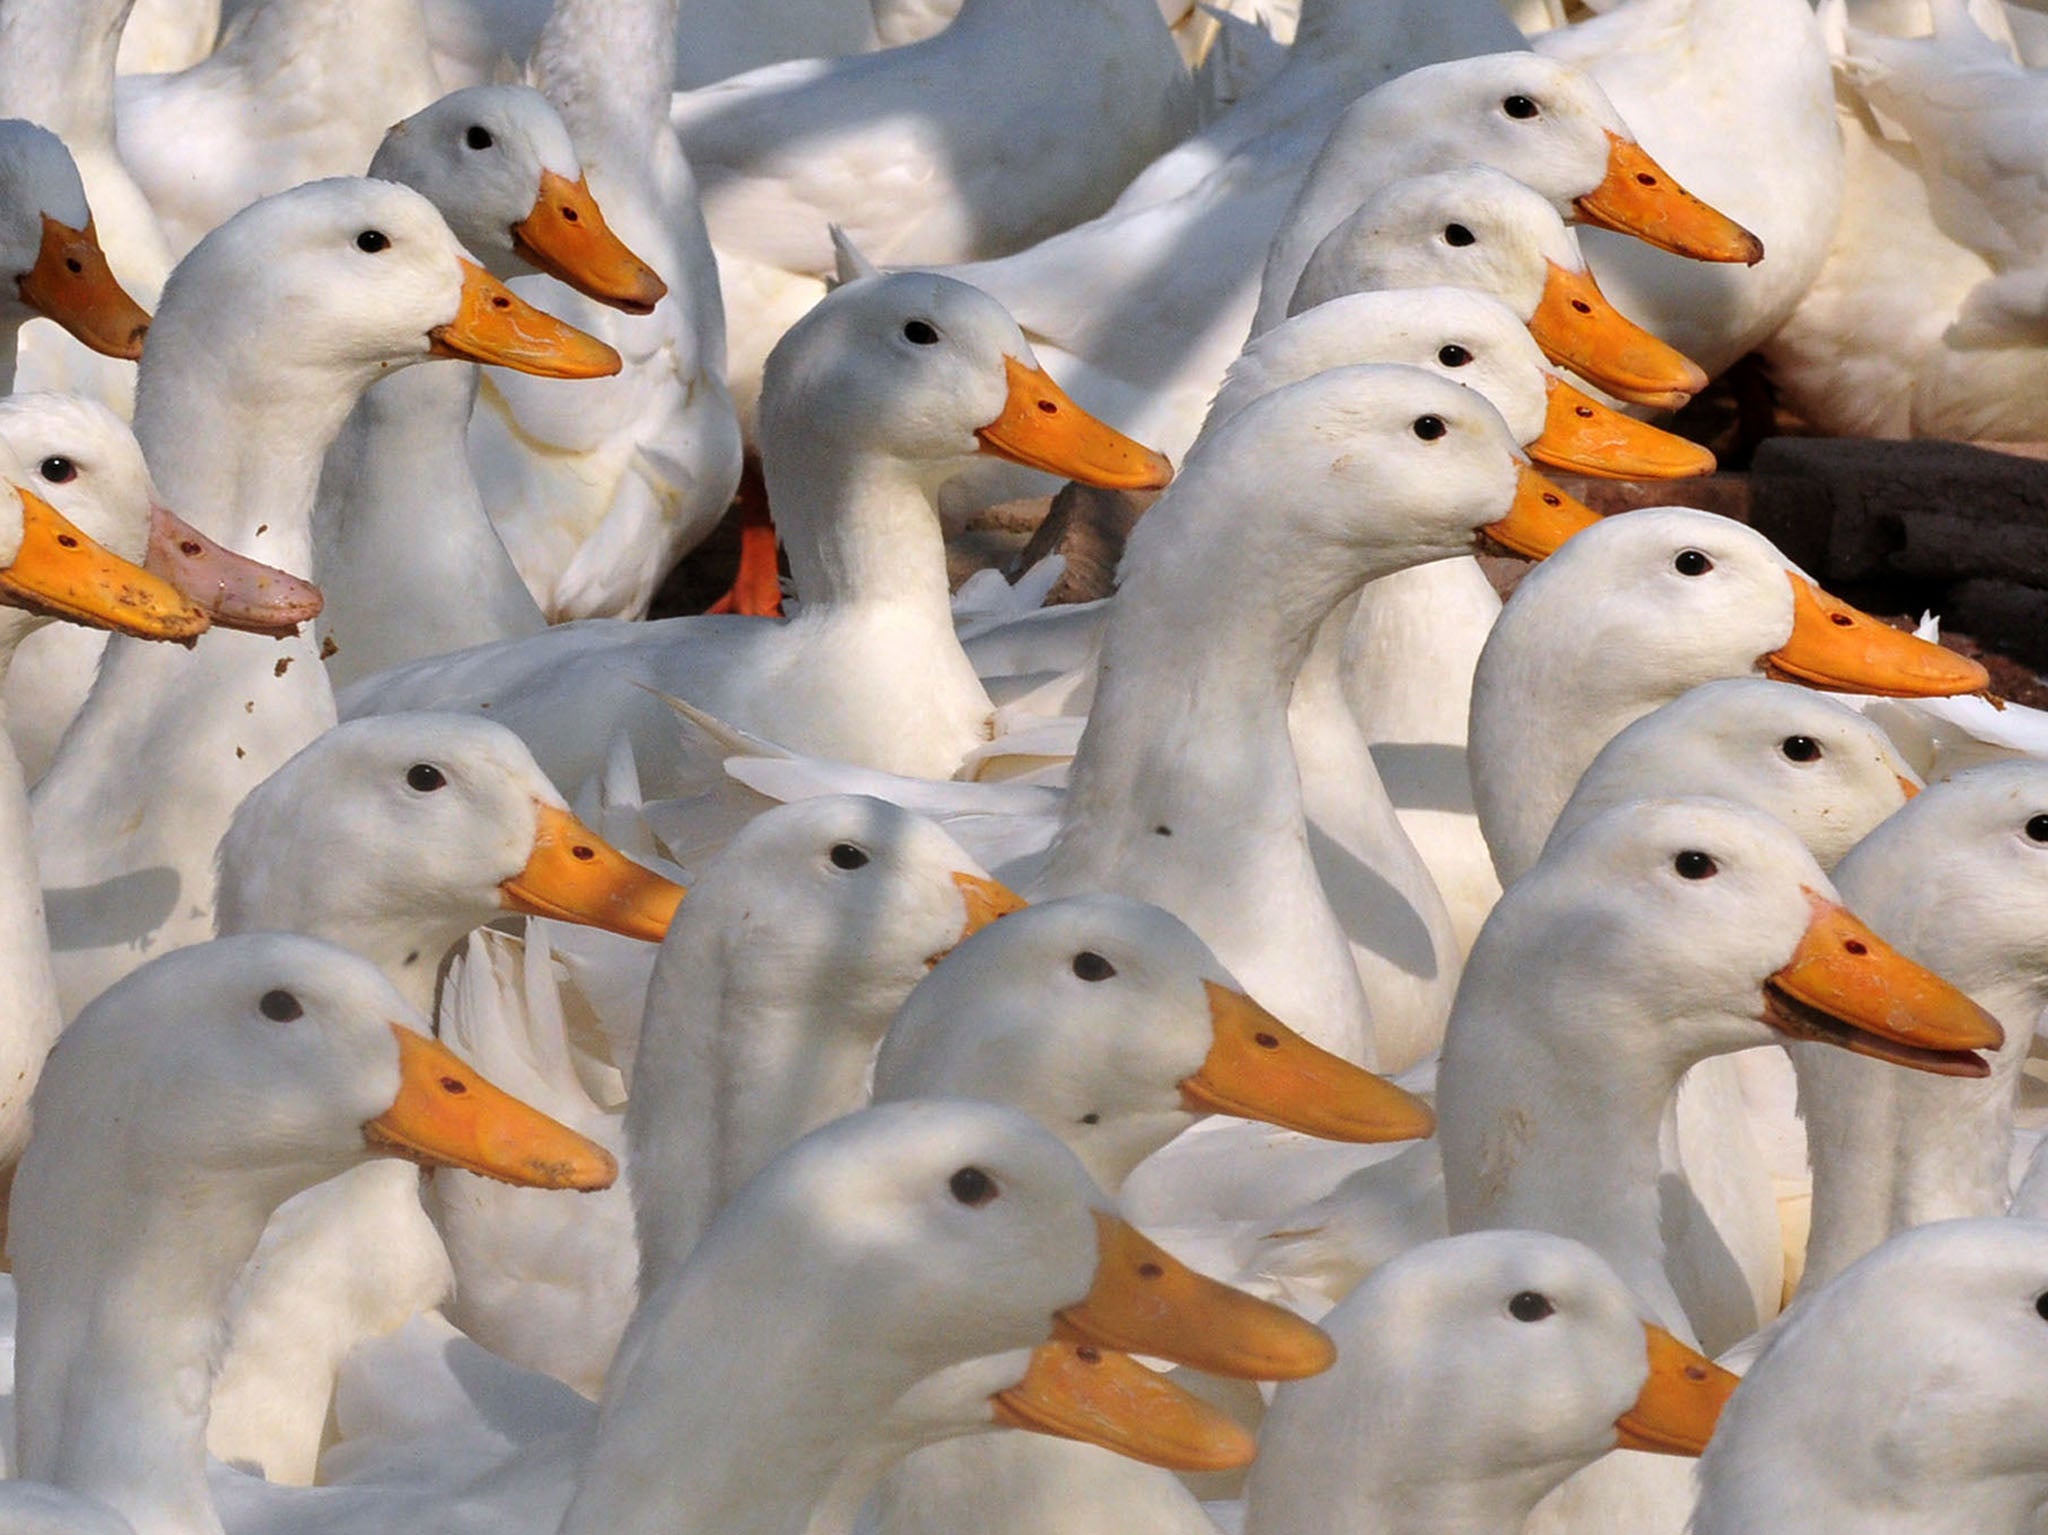 Dutch authorities destroy 190,000 ducks after bird flu outbreak